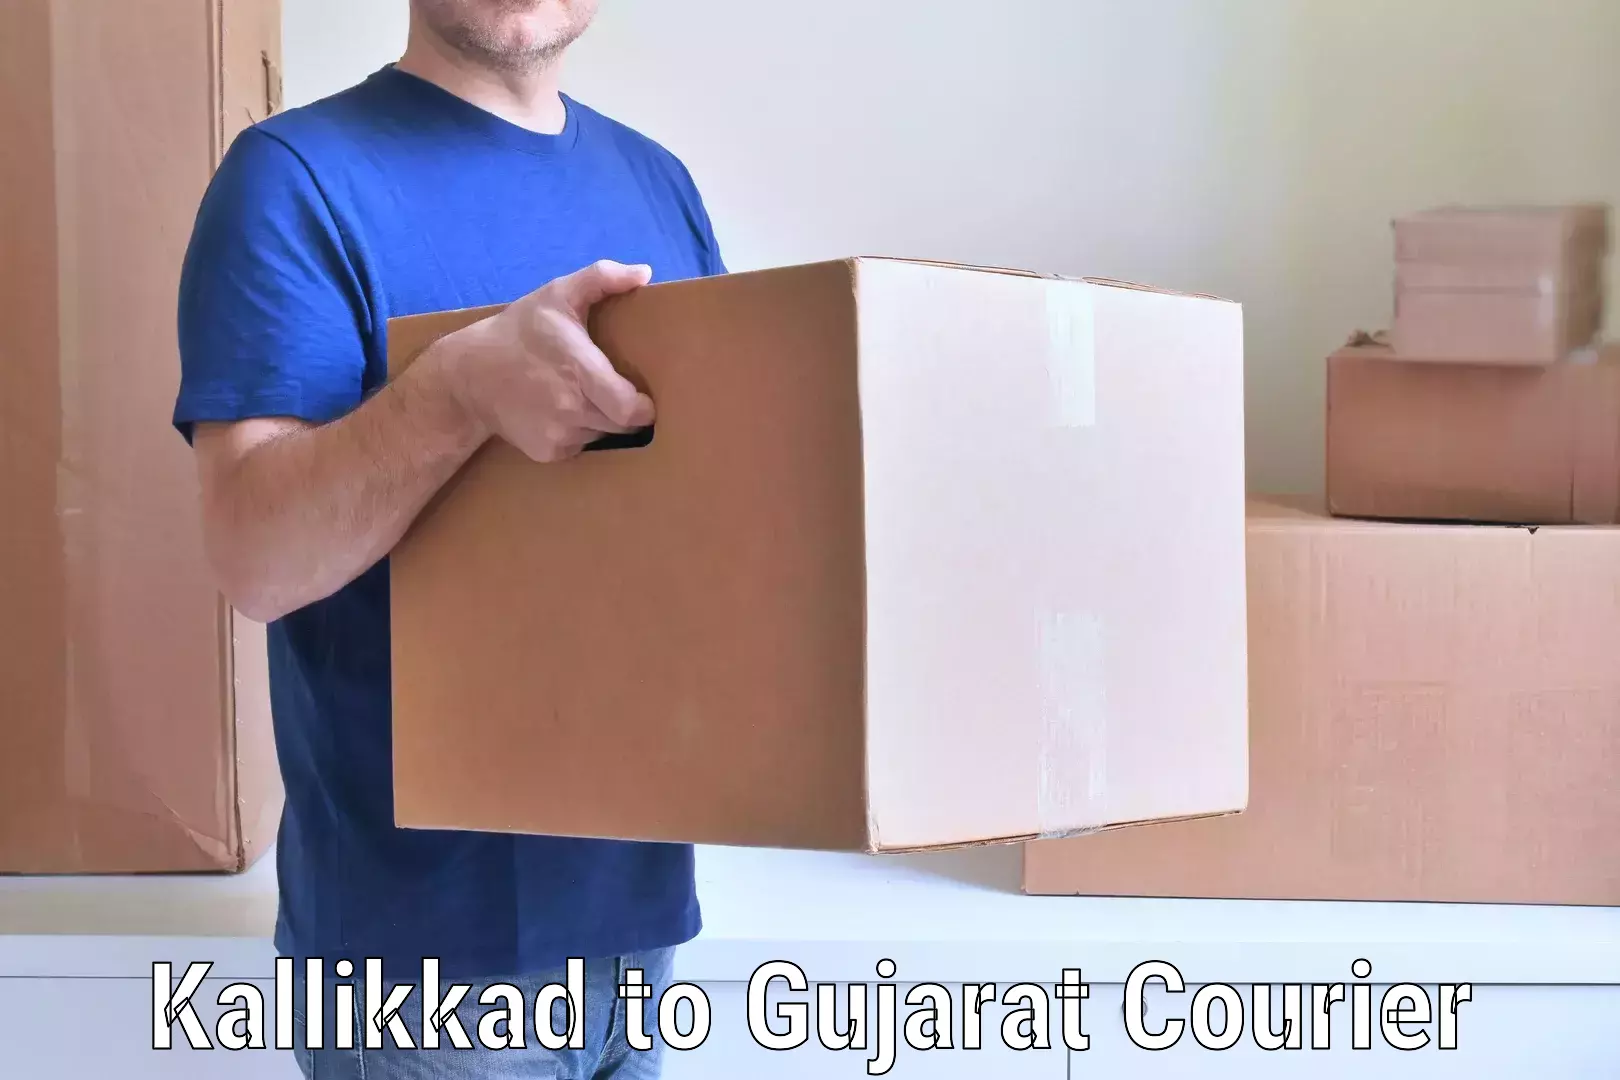 Furniture delivery service Kallikkad to Rajpipla